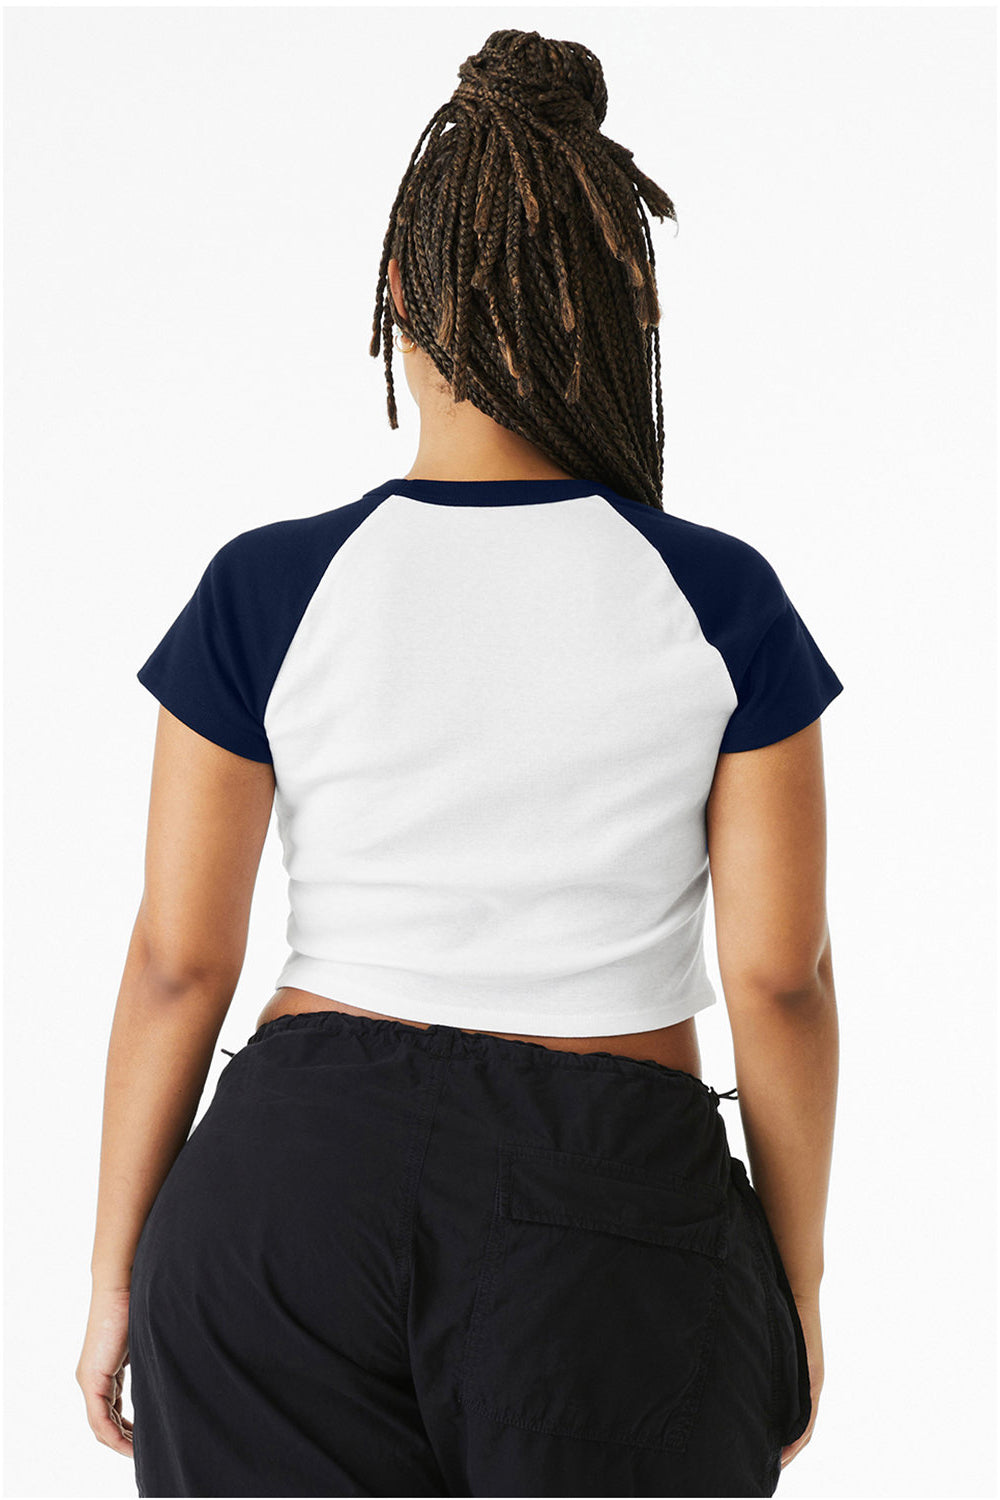 Bella + Canvas 1201 Womens Micro Ribbed Raglan Short Sleeve Crewneck Baby T-Shirt White/Navy Blue Model Back